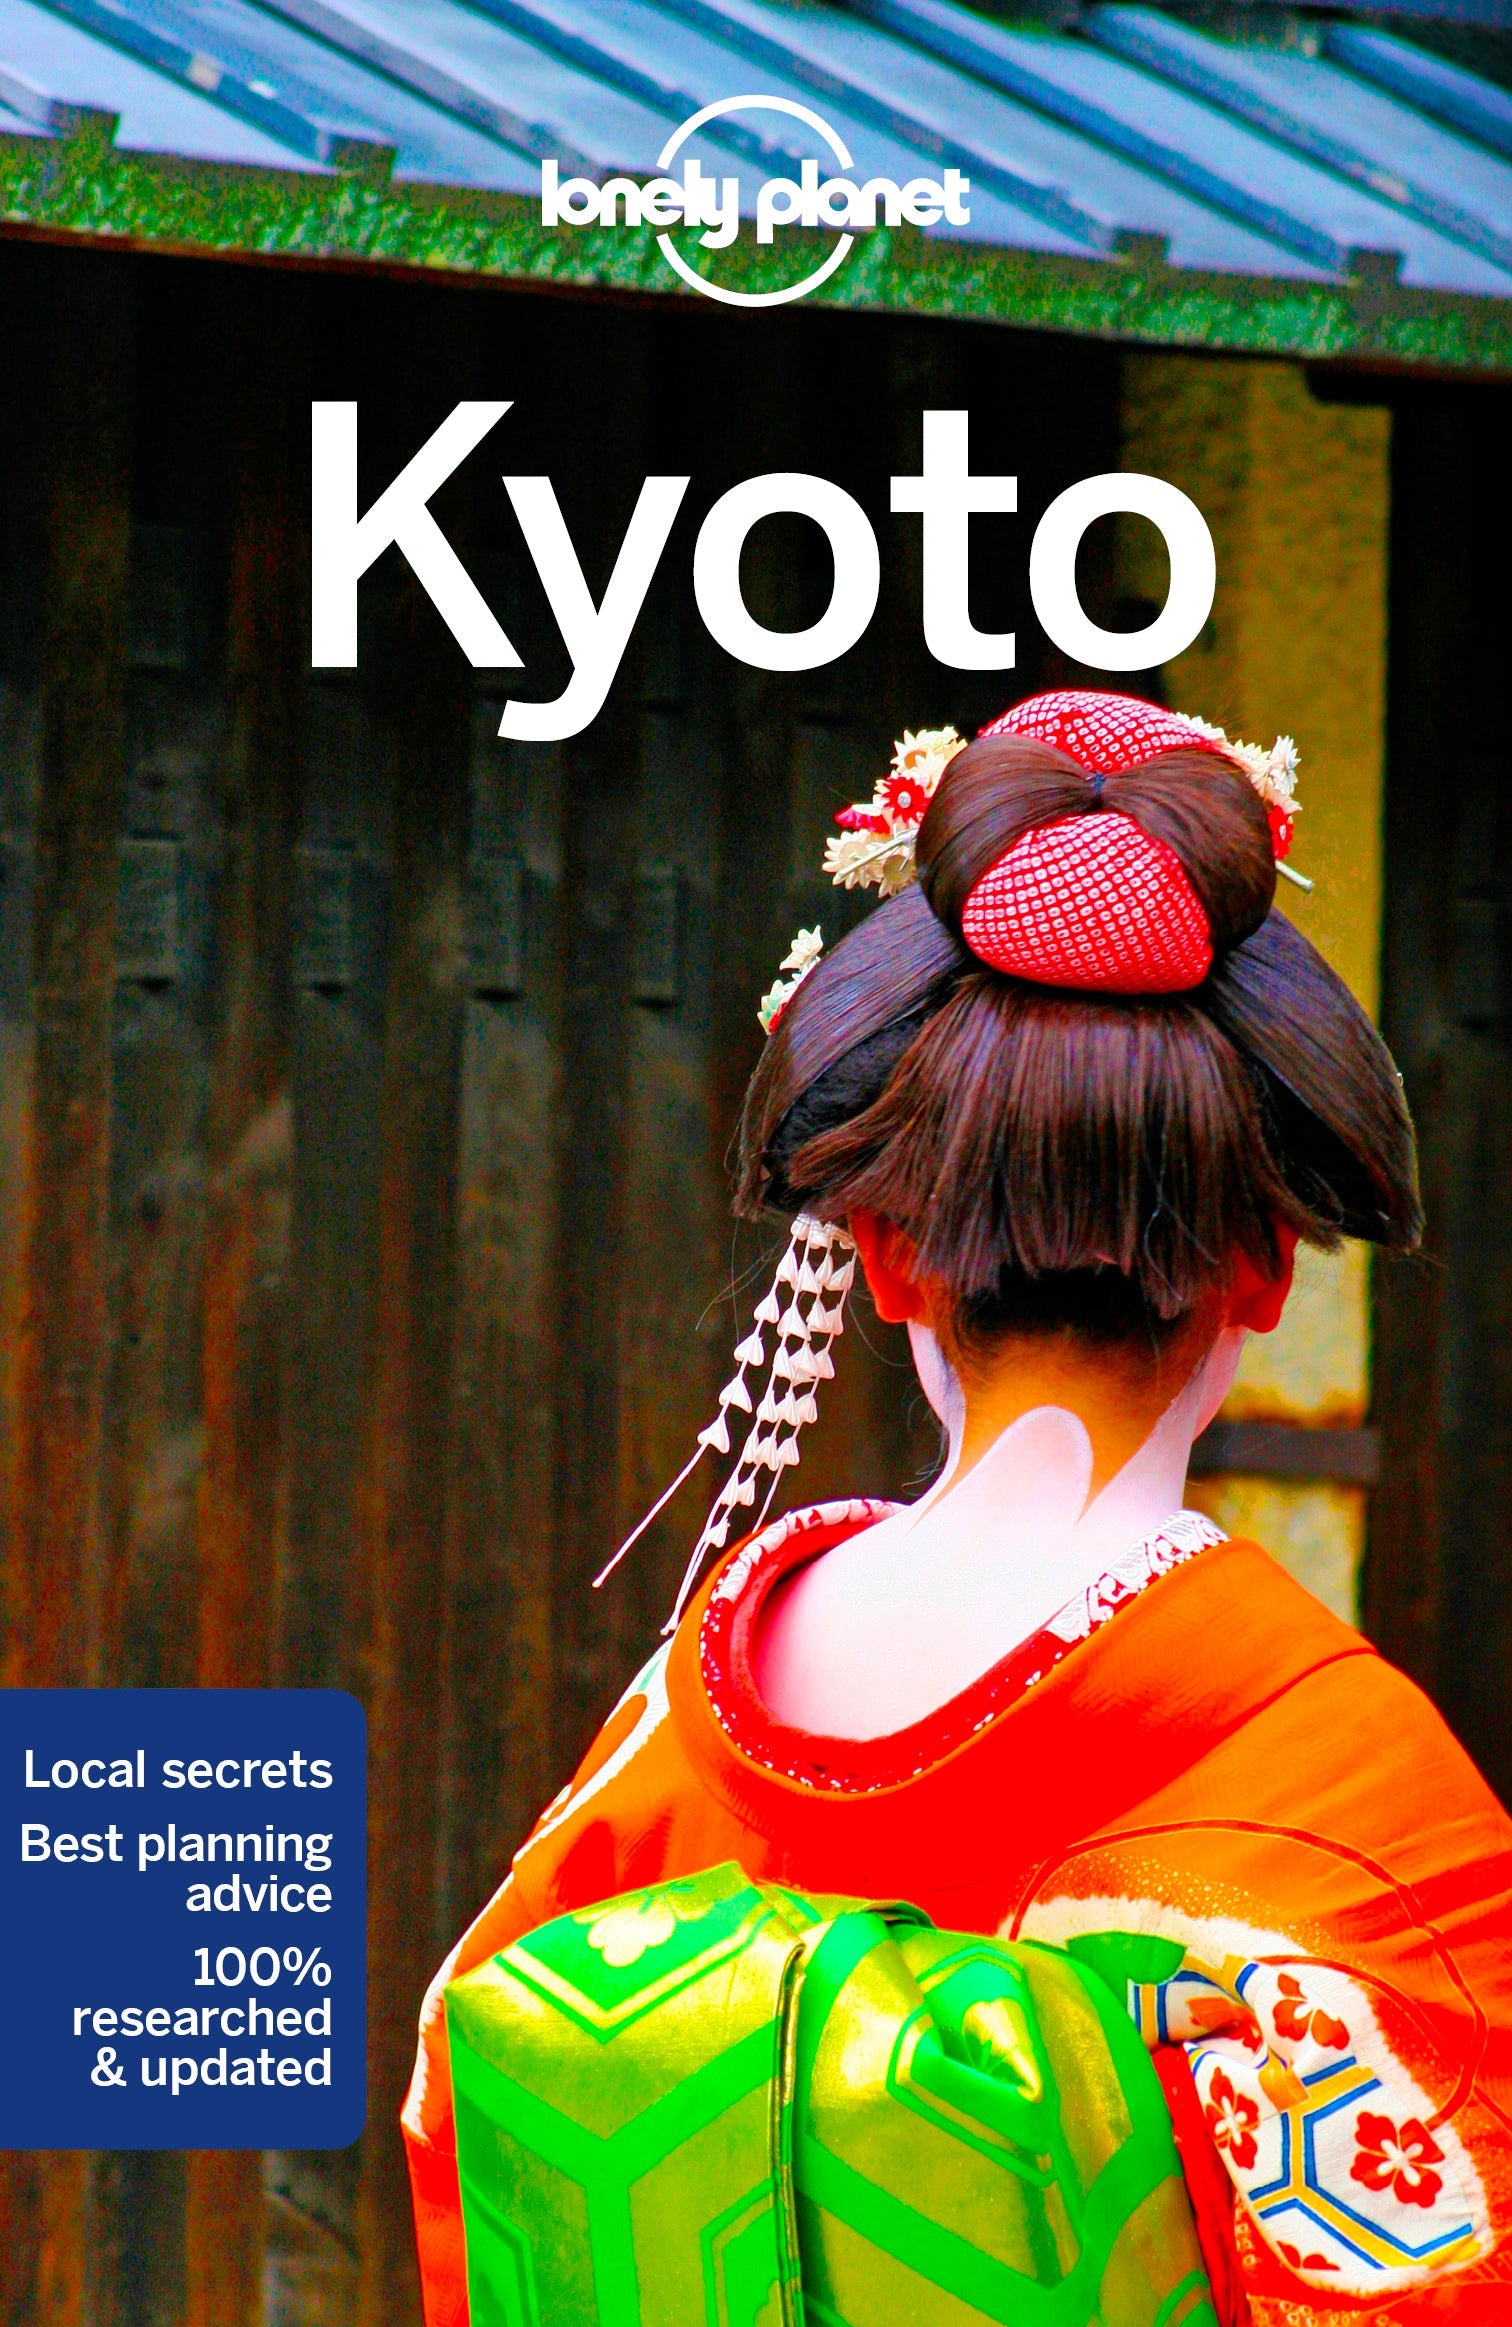 Kyoto preview